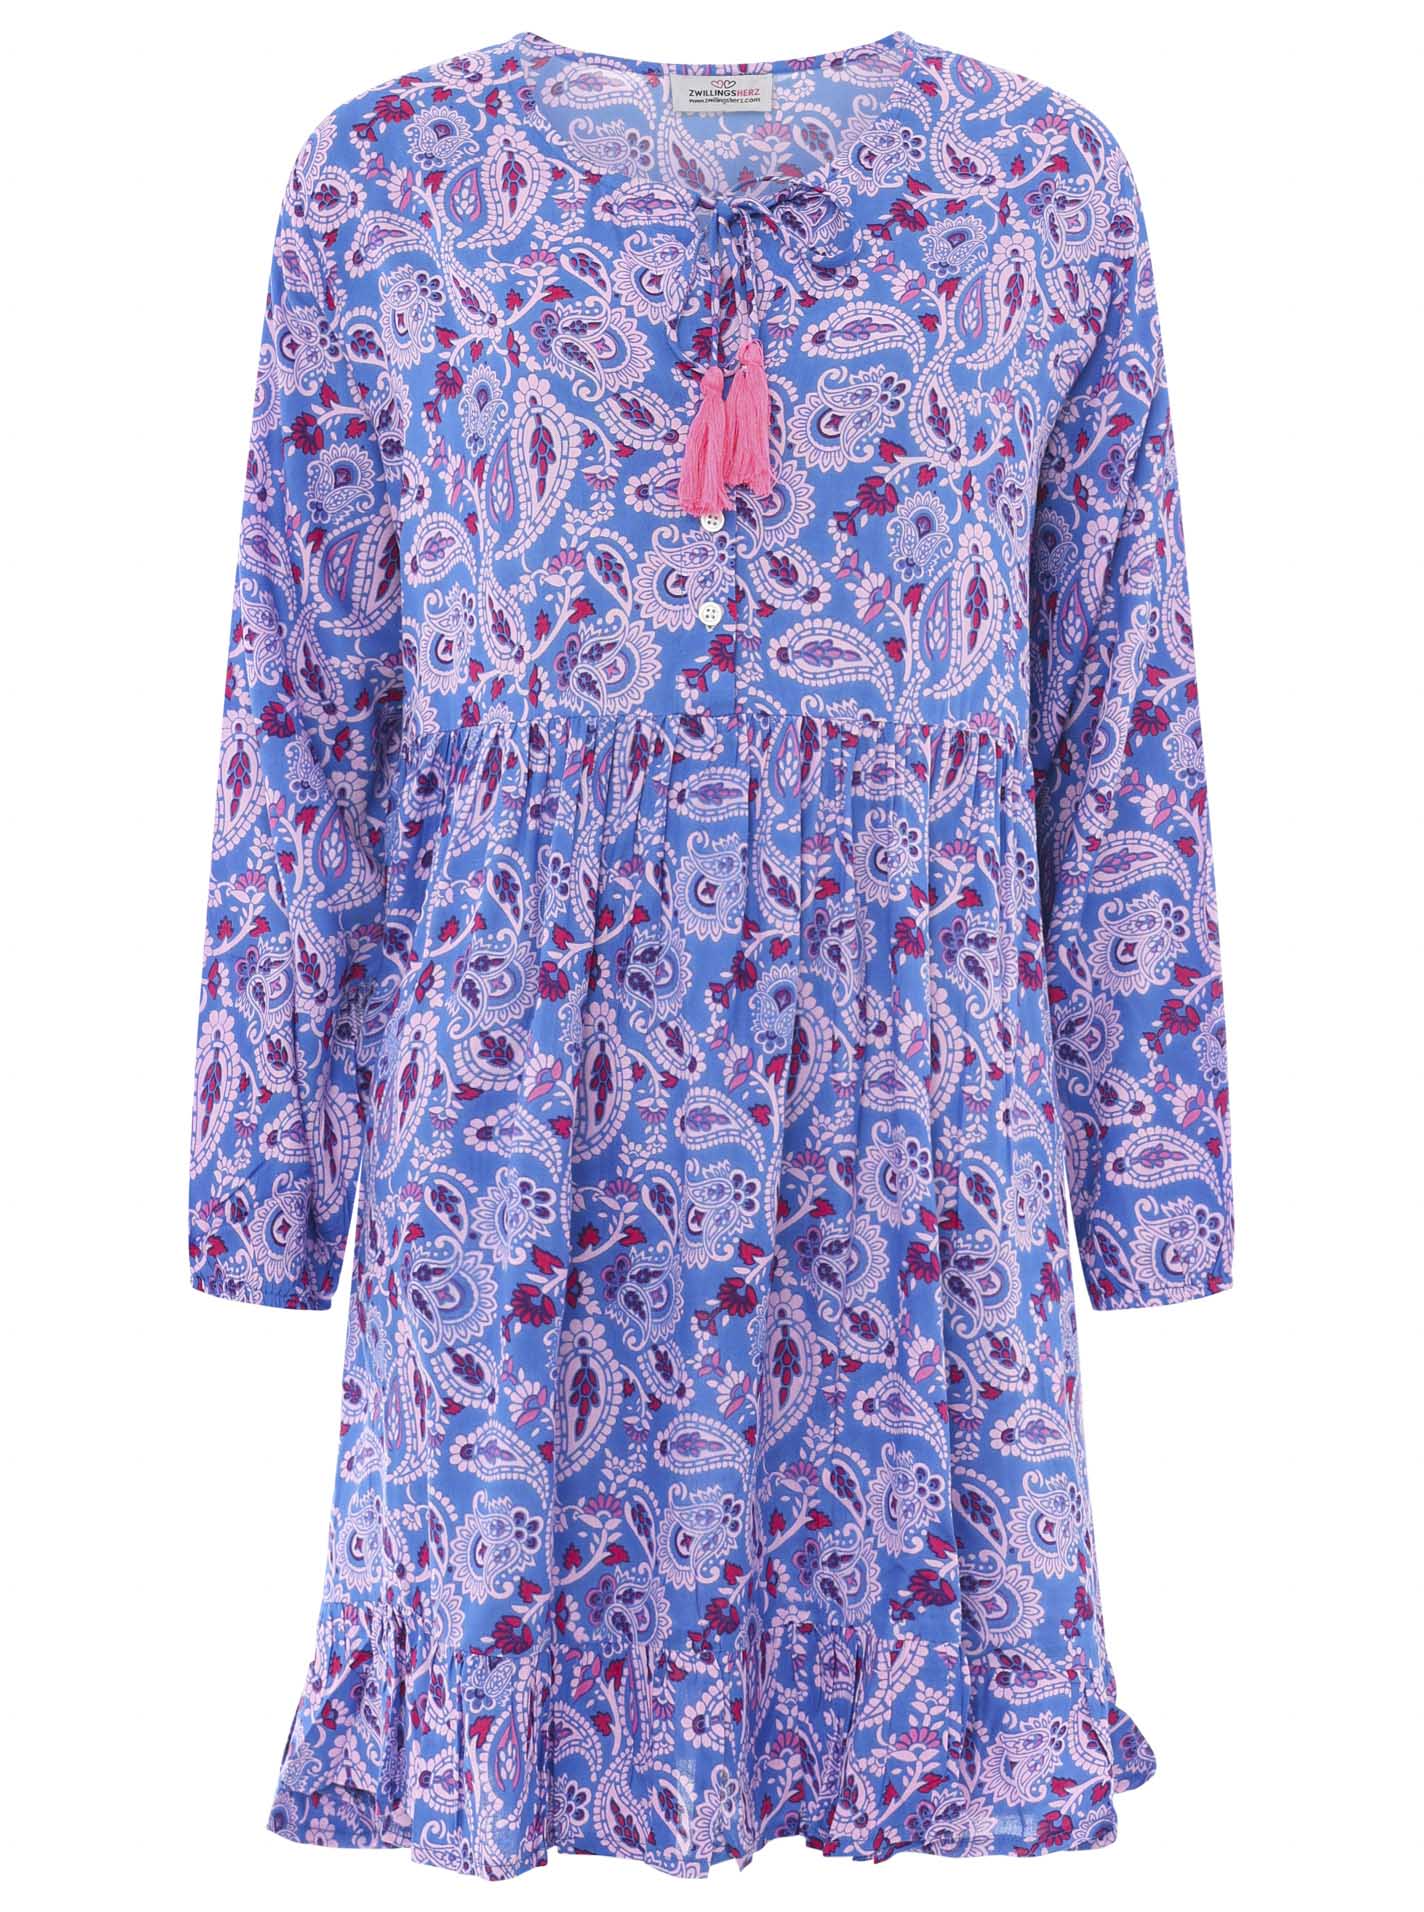 Zwillingsherz - Kleid/Tunika Paisley Design - Blau/Pink